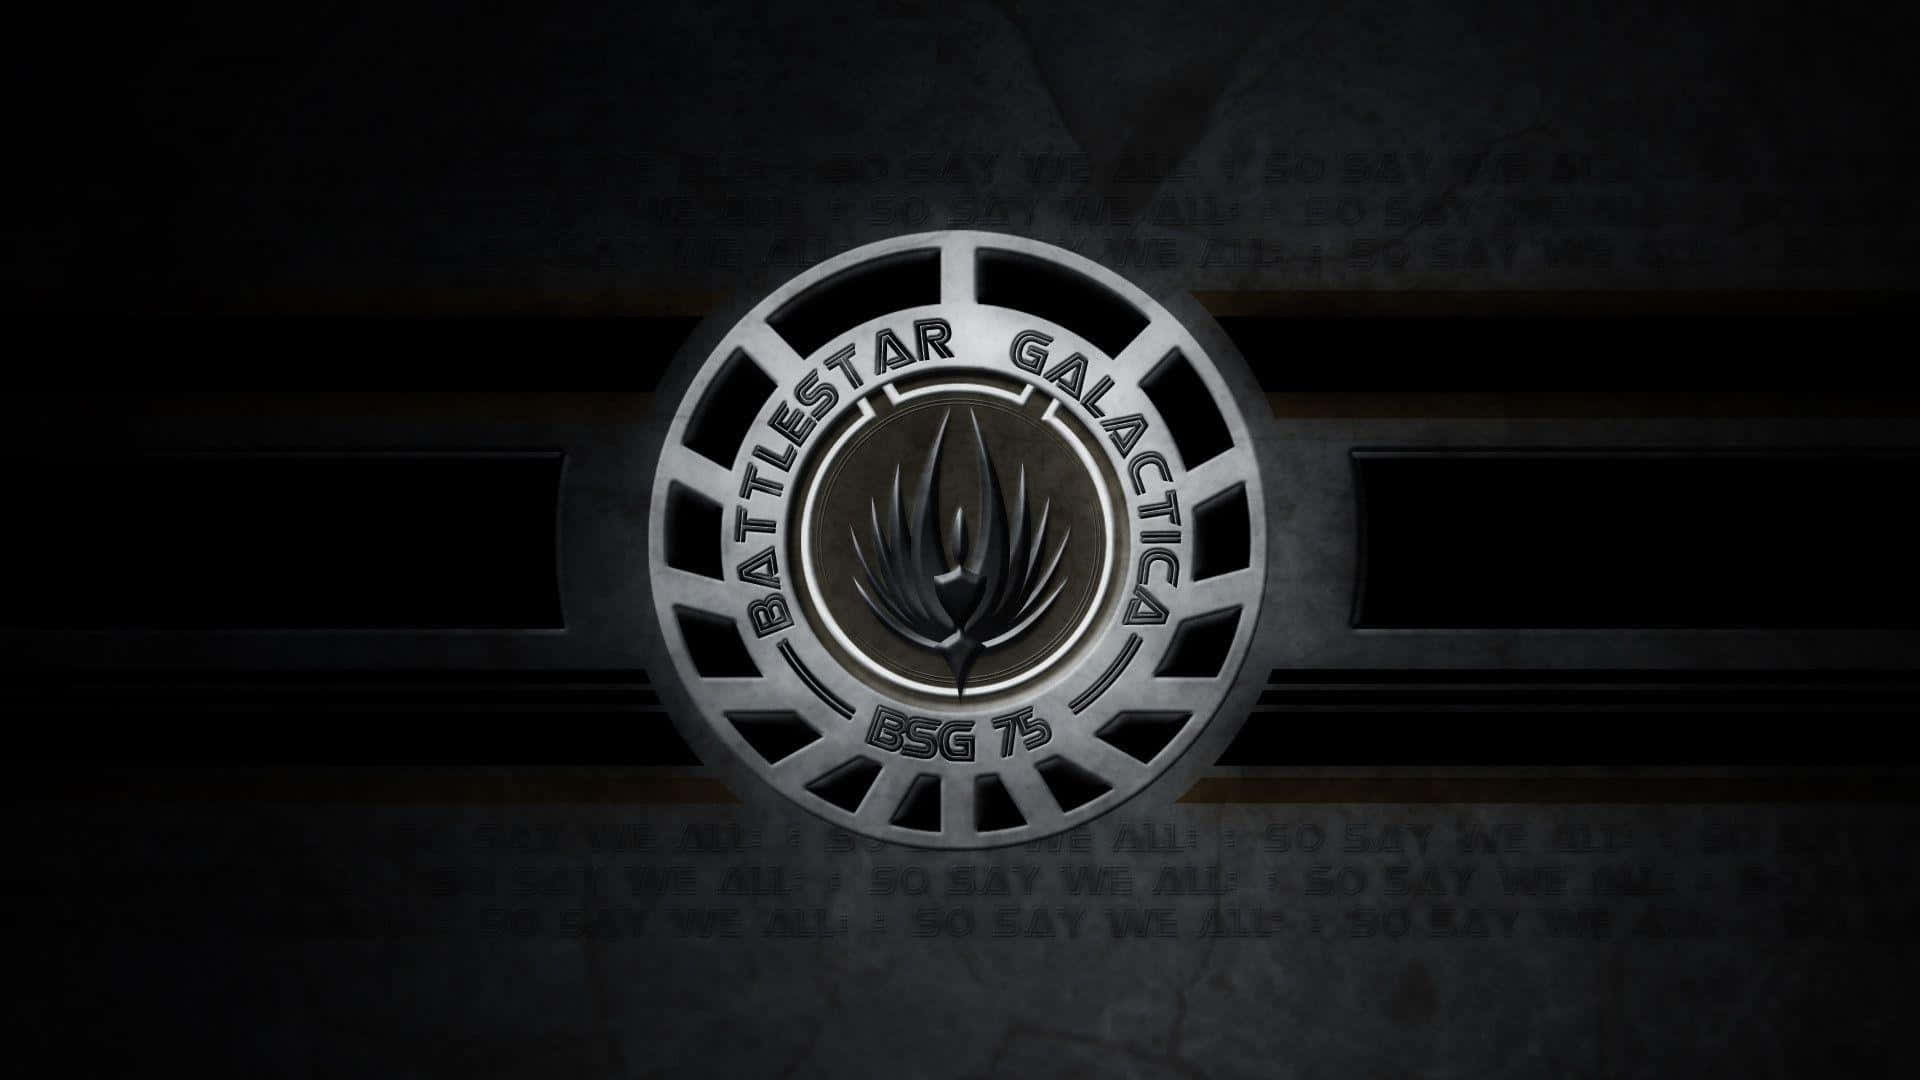 Logogrigio Di Battlestar Galactica Sfondo